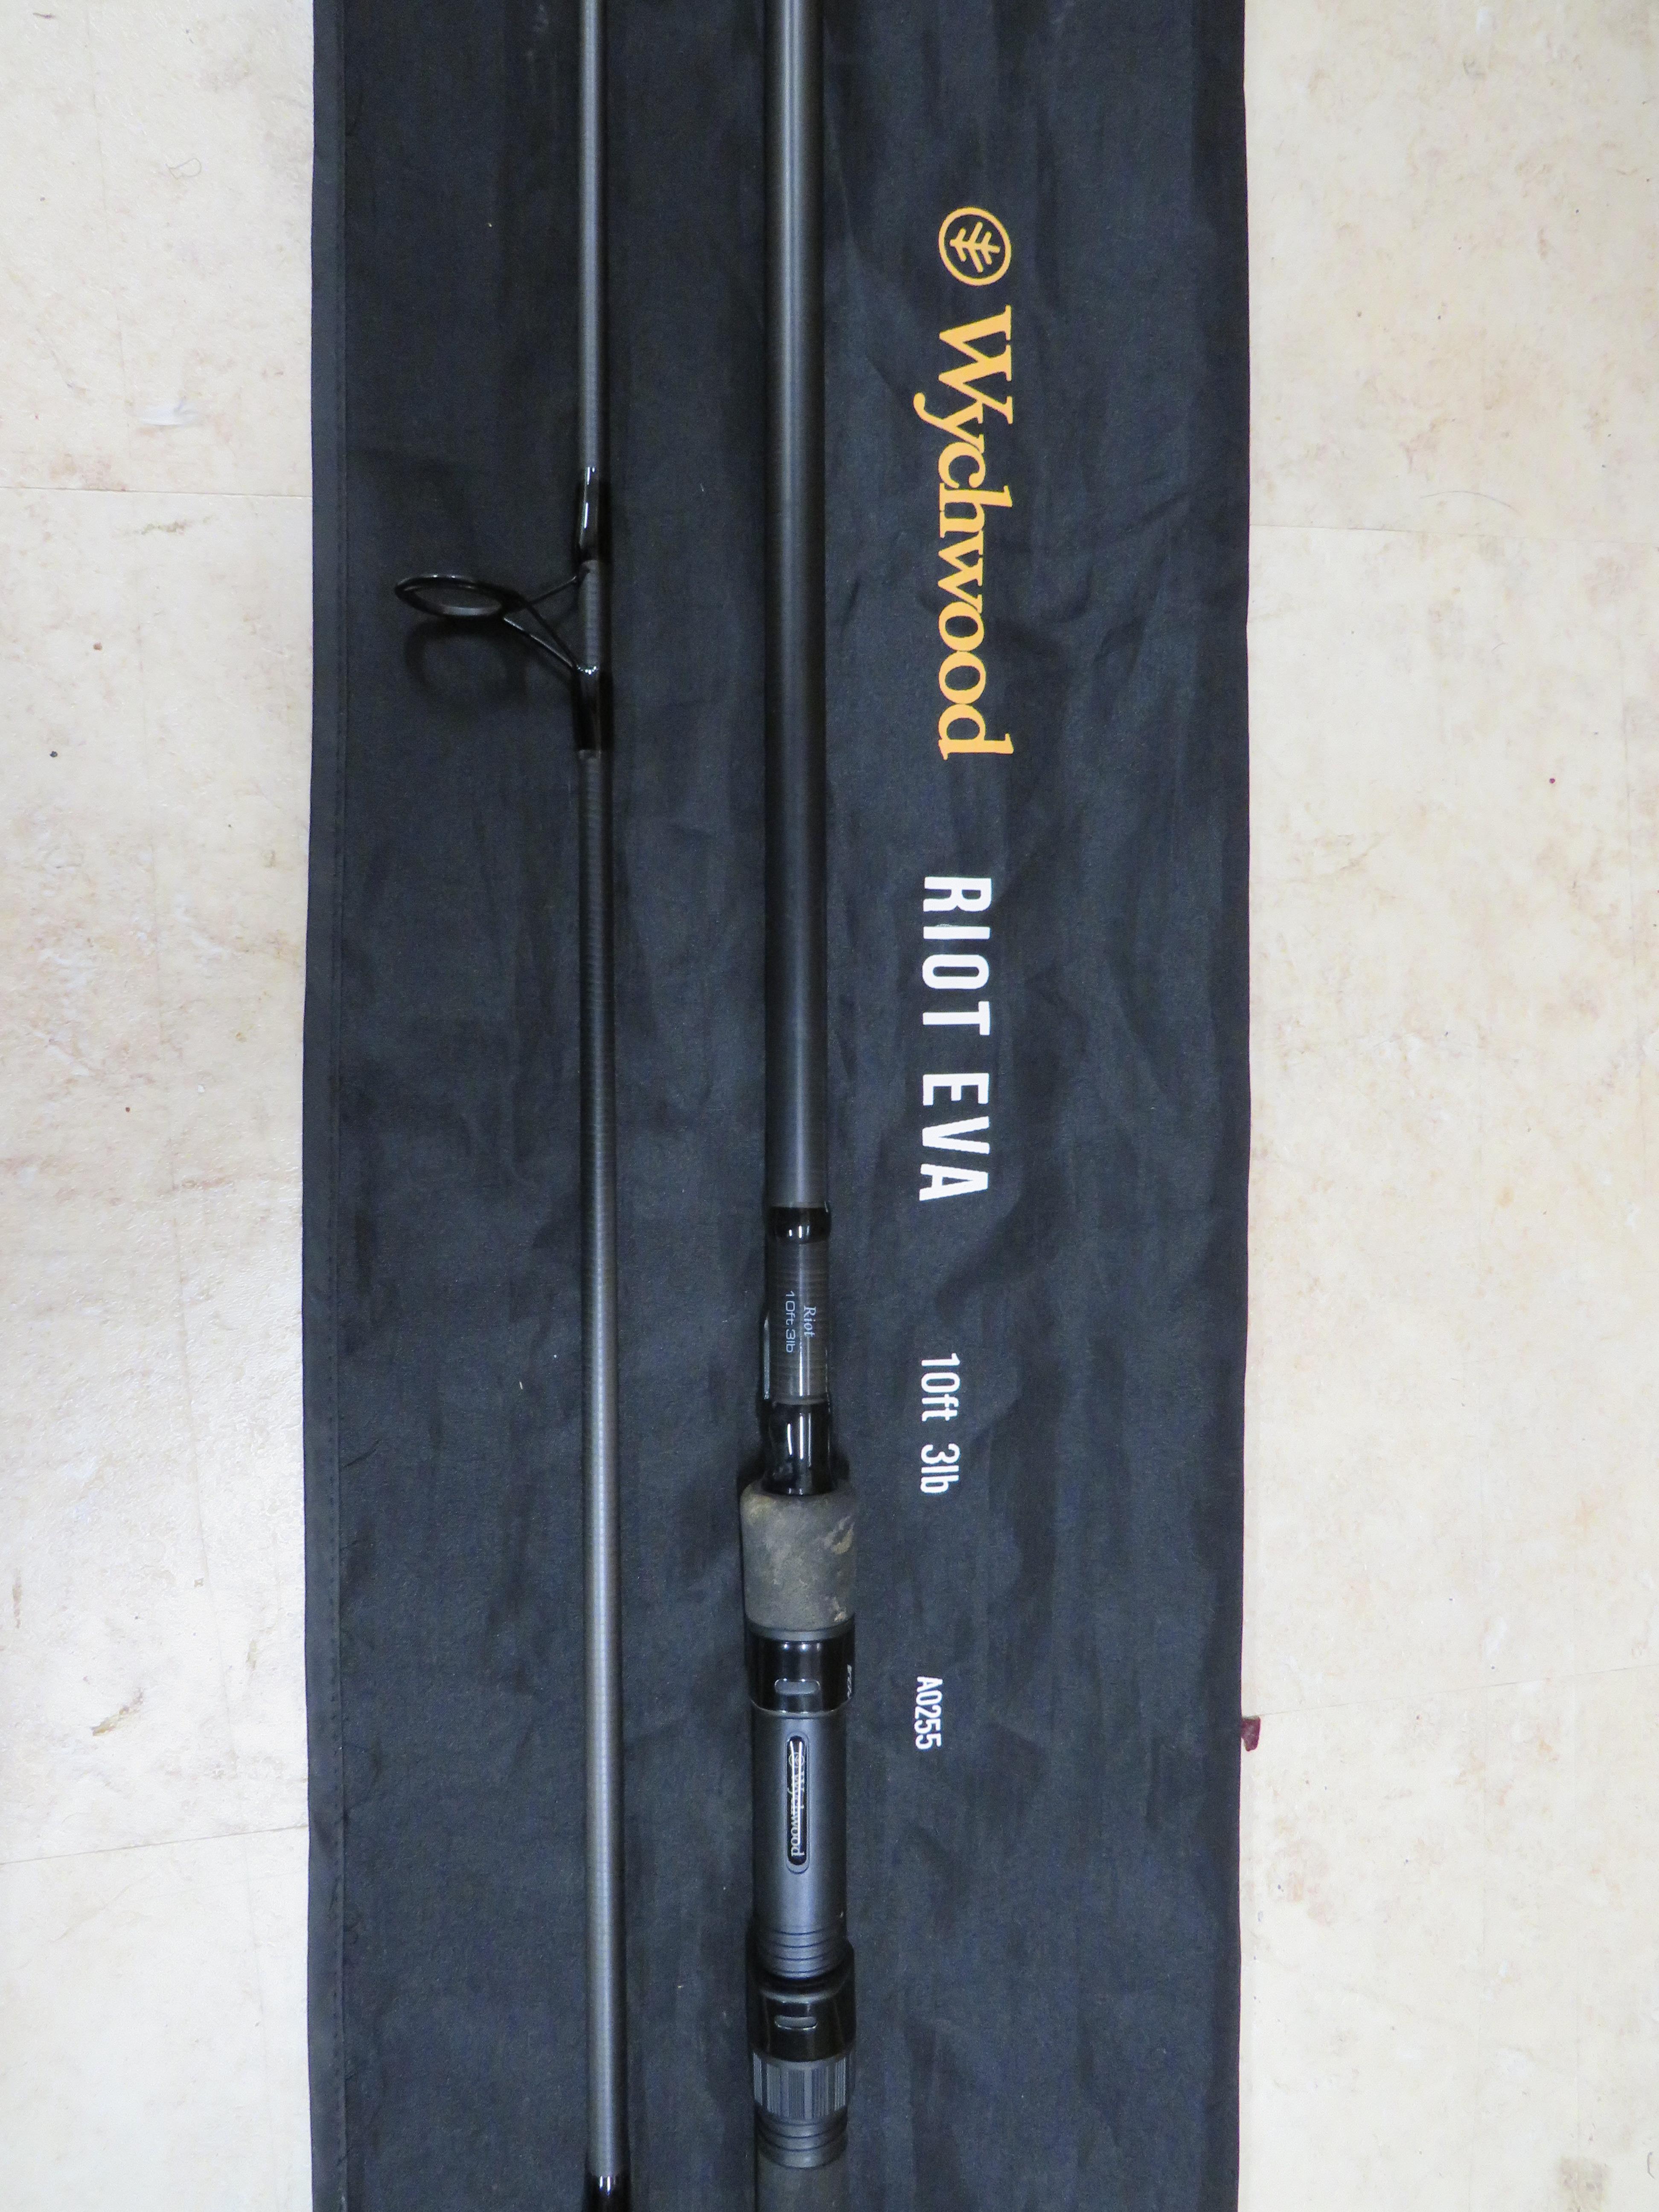 Wytchwood Carp rod. Riot Eva 10ft Carbon Fibre rod. Complete with cloth bag. See photos. 